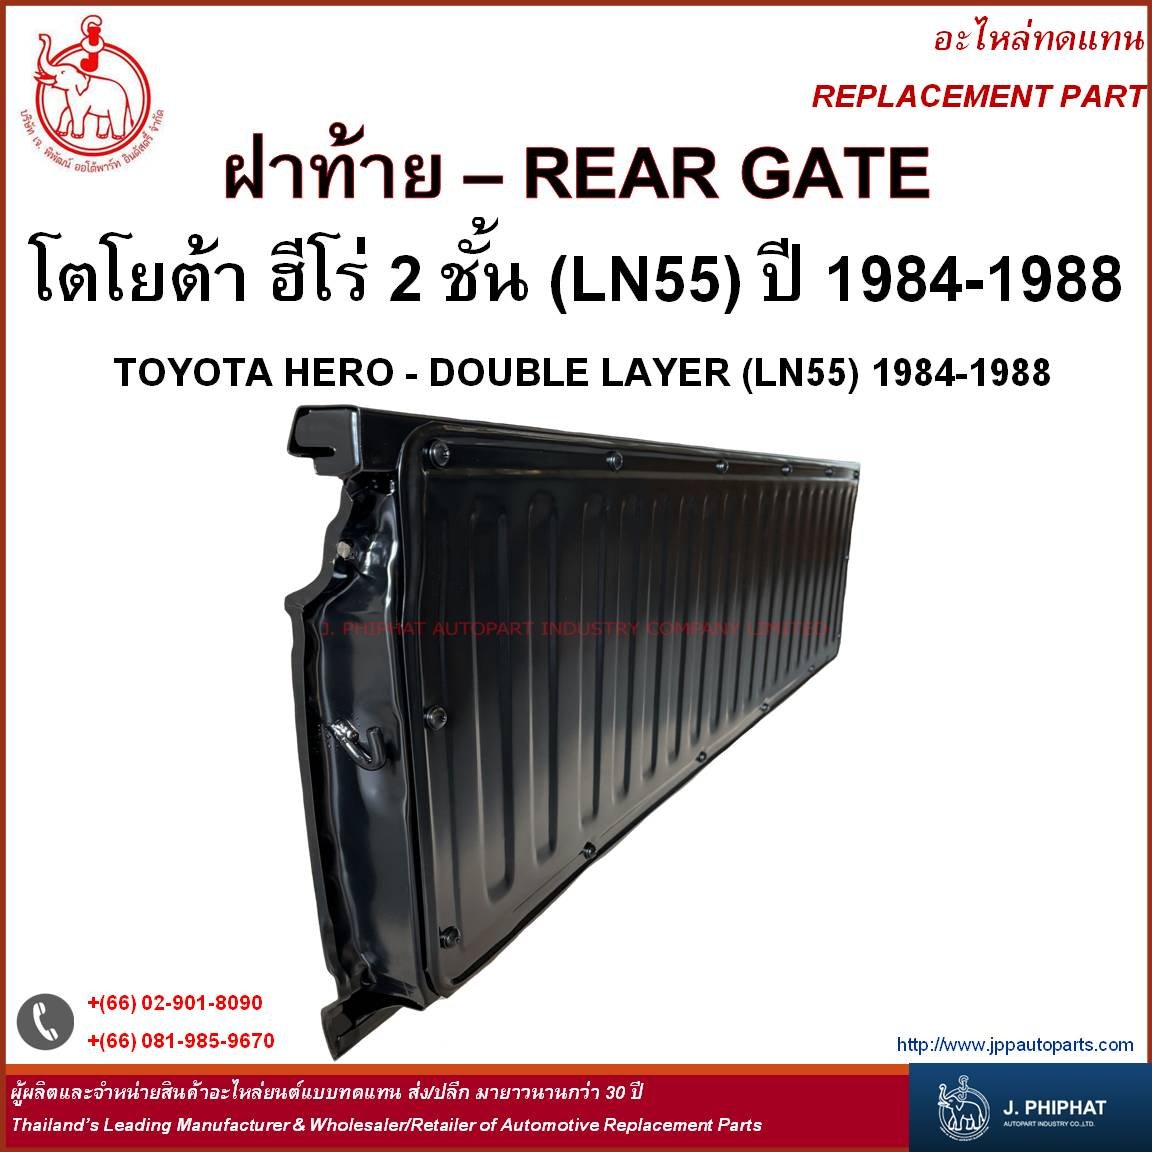 Rear Gate - Toyota Hero LN 55 '84-88 (Double Layer)